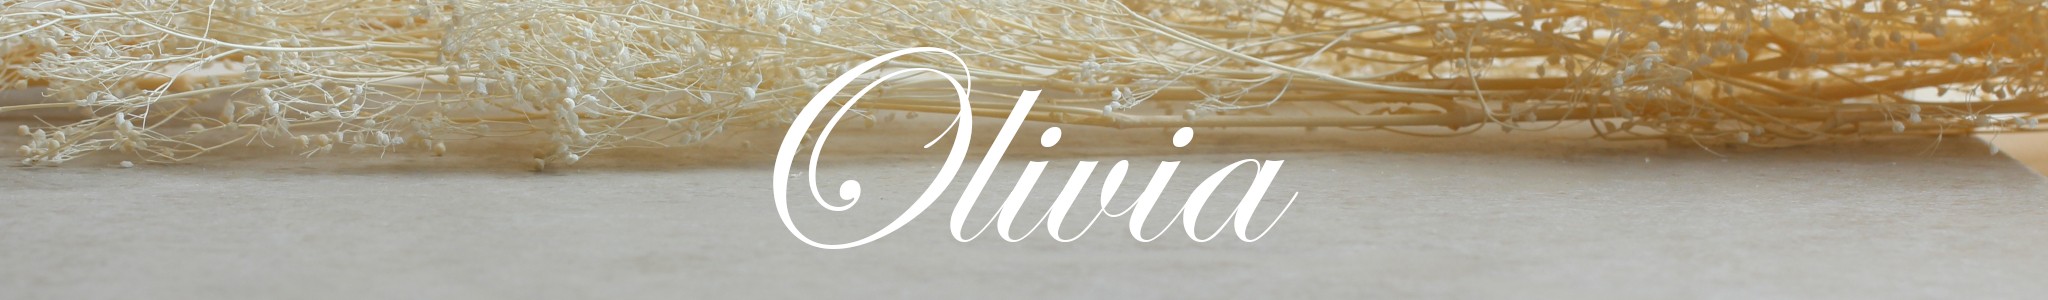 Olivia Product Line Image